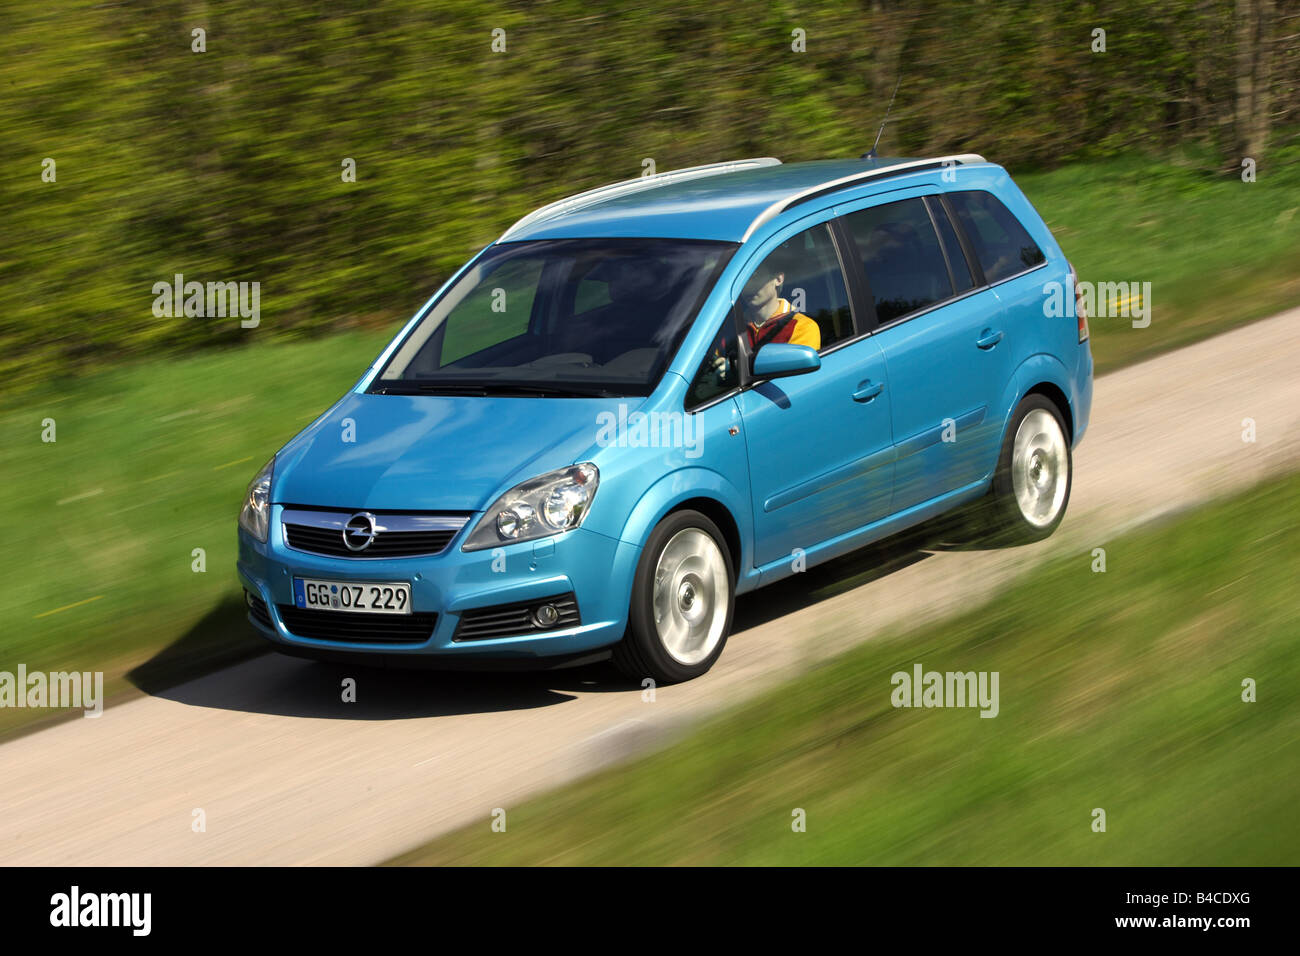 Opel Zafira Life Passenger Van L2 2019 Editorial Stock Photo